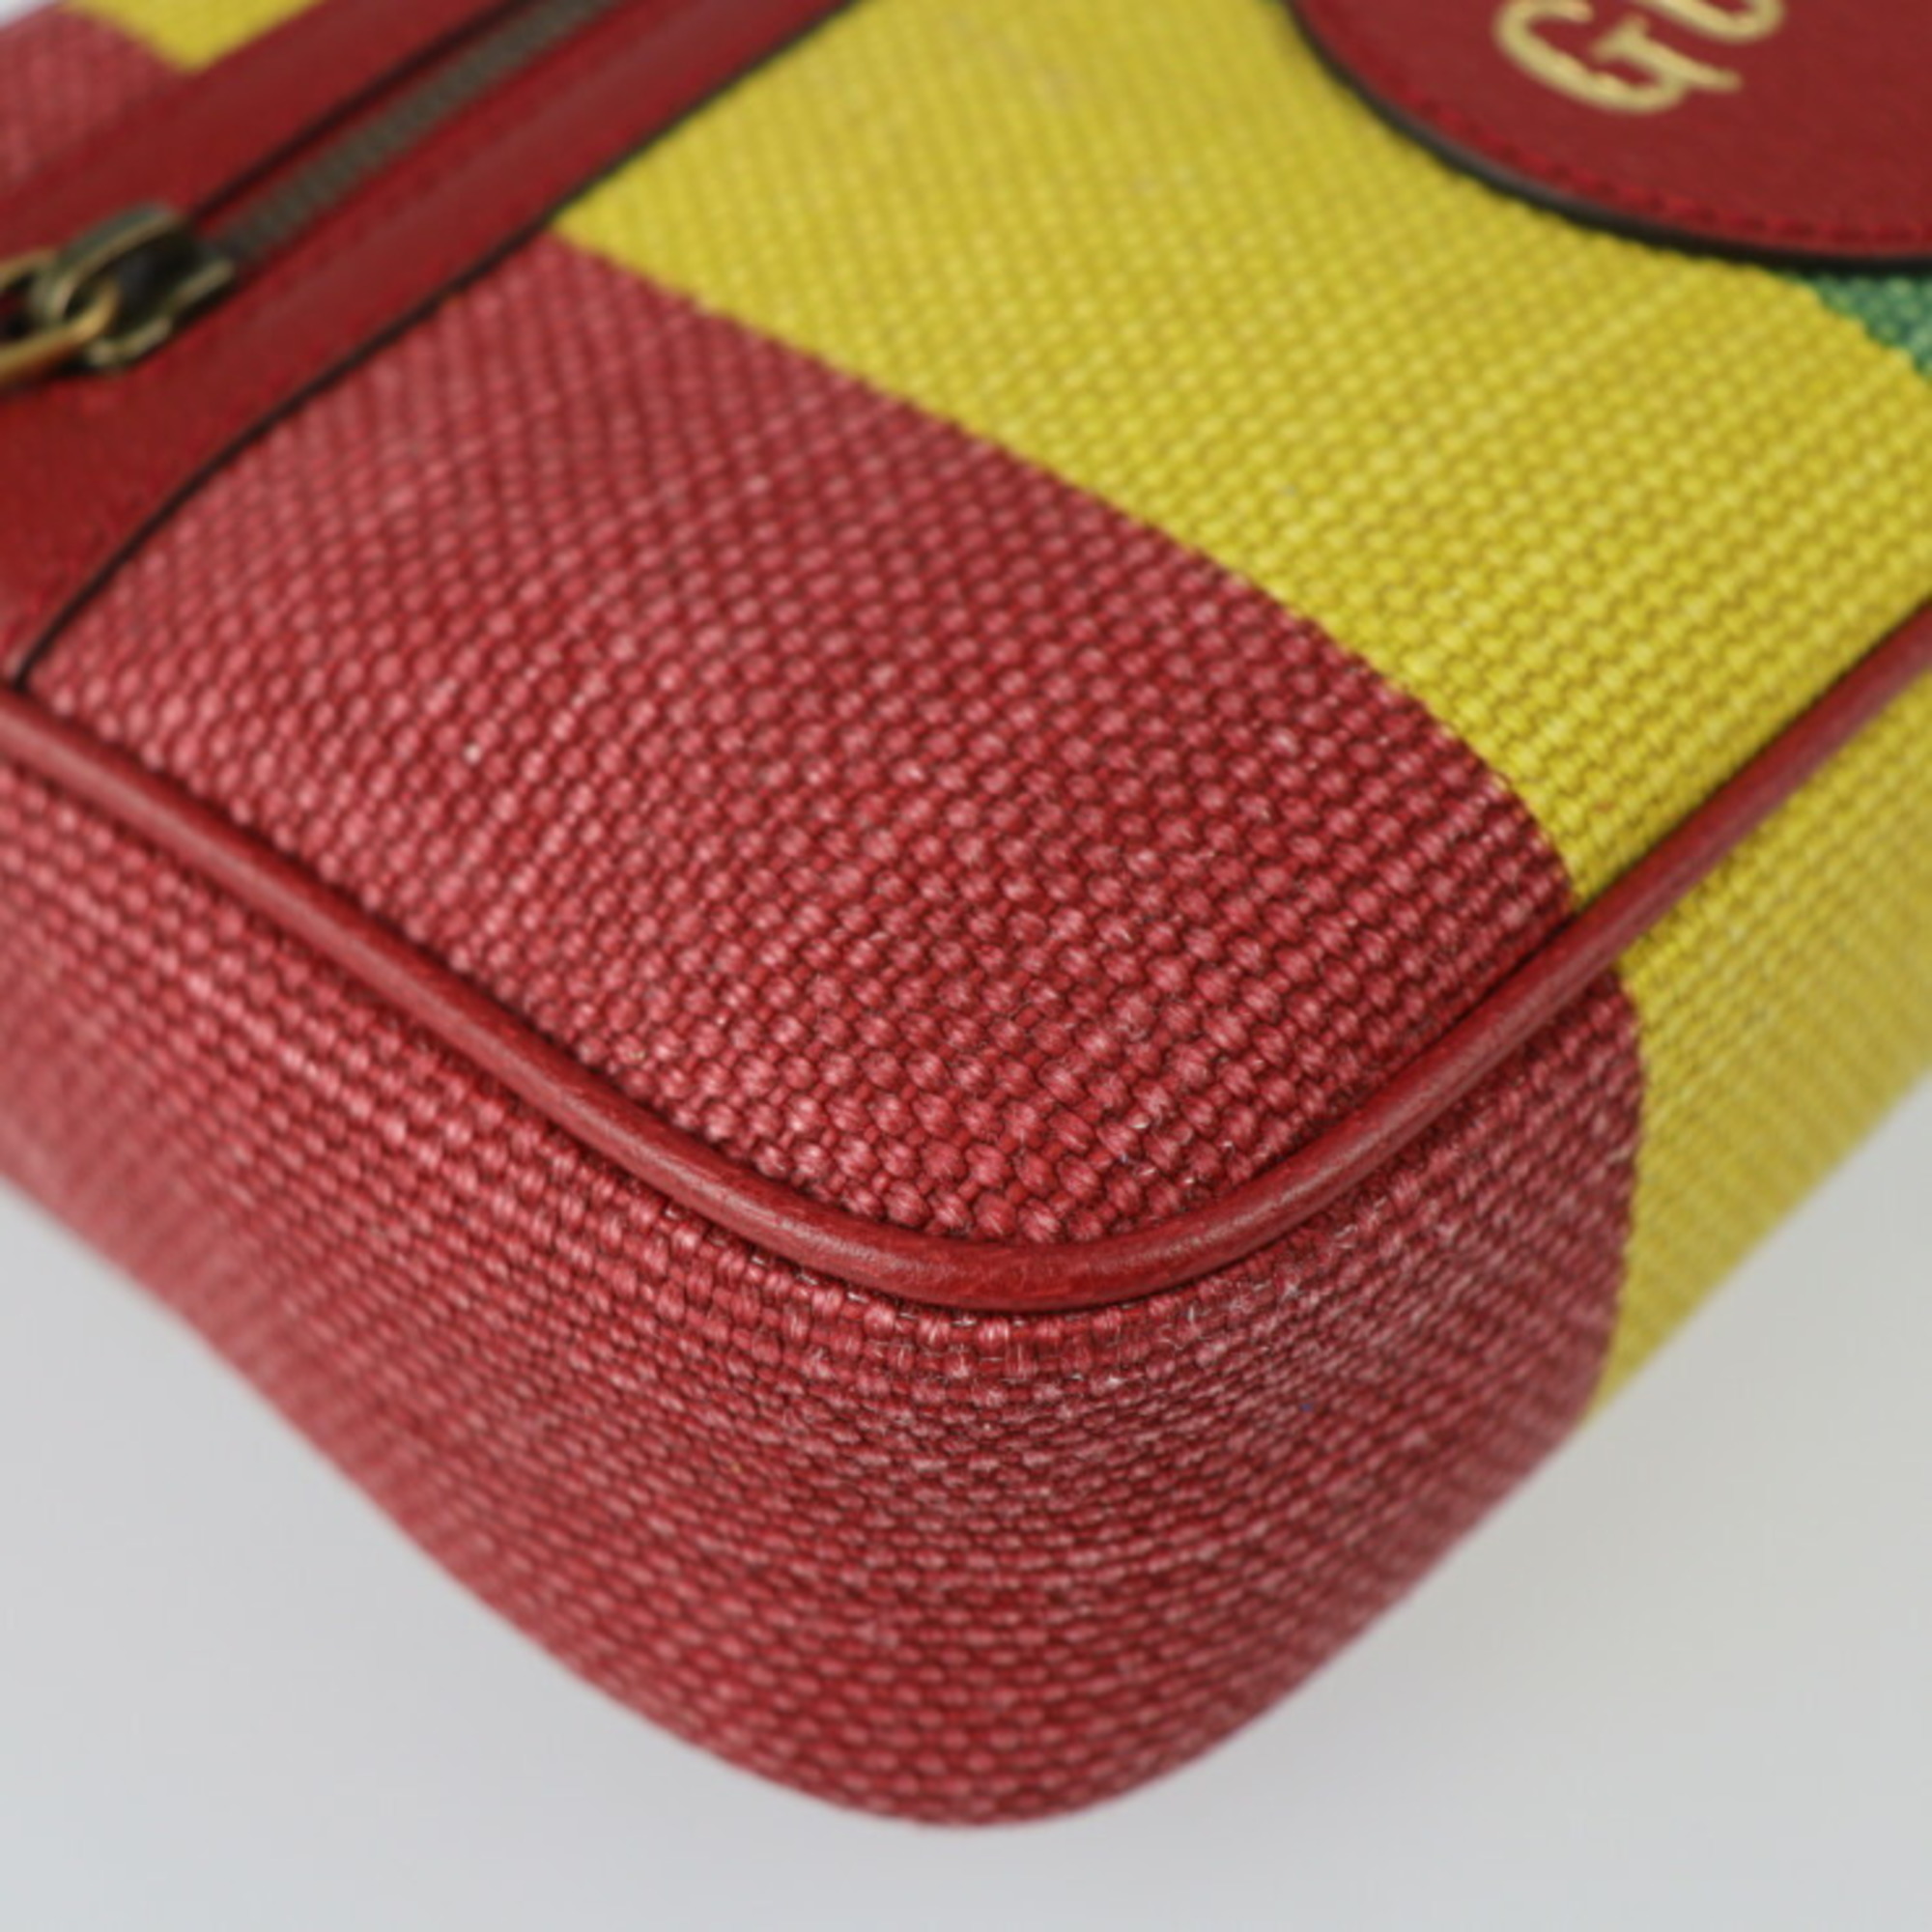 GUCCI Gucci Baiadera Waist Bag 625895 Notation Size 80/32 Canvas Leather Multicolor Gold Hardware Belt Body